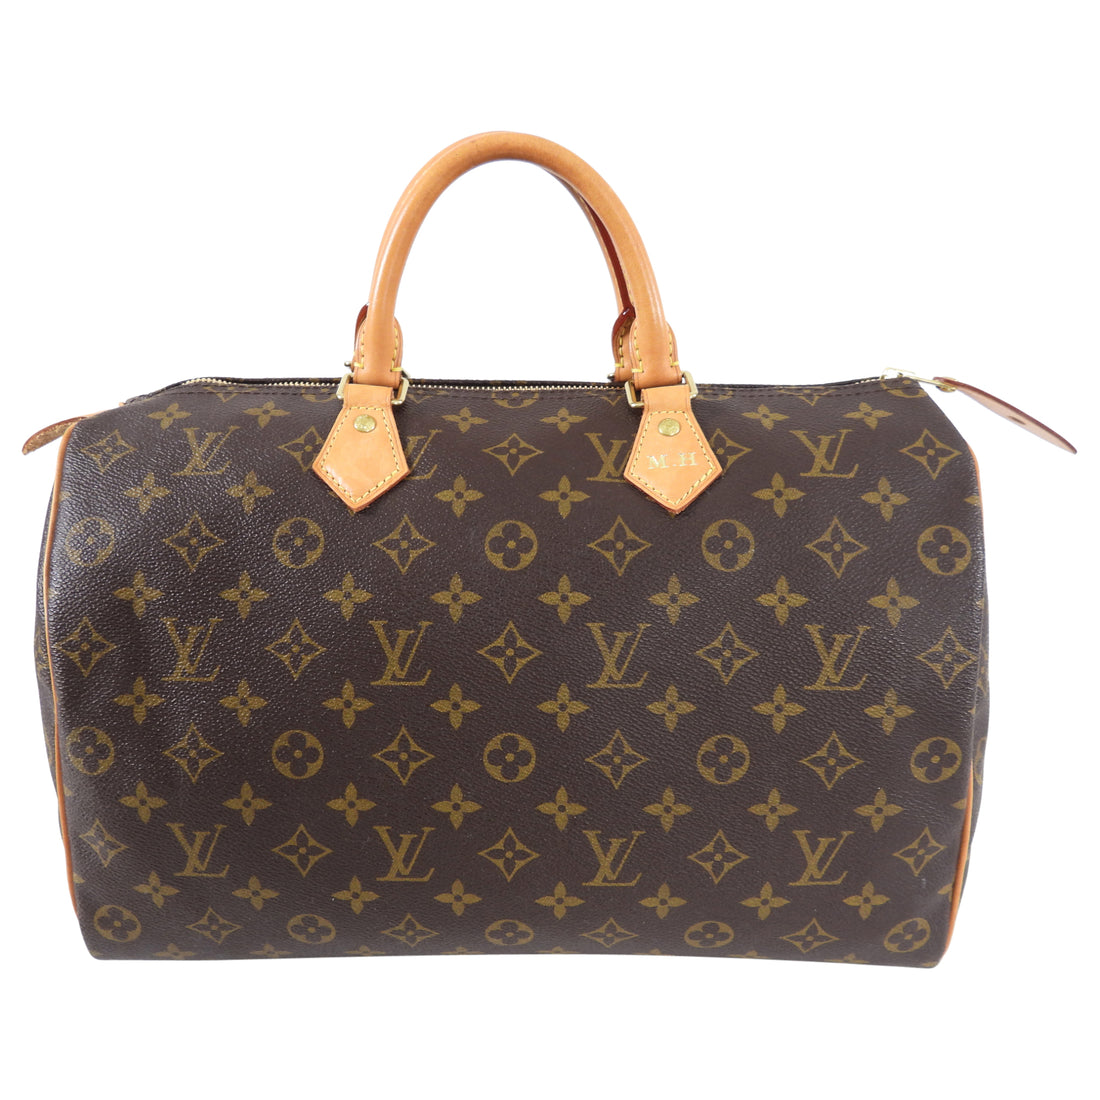 Louis Vuitton Monogram Speedy 35 Boston Duffle Bag